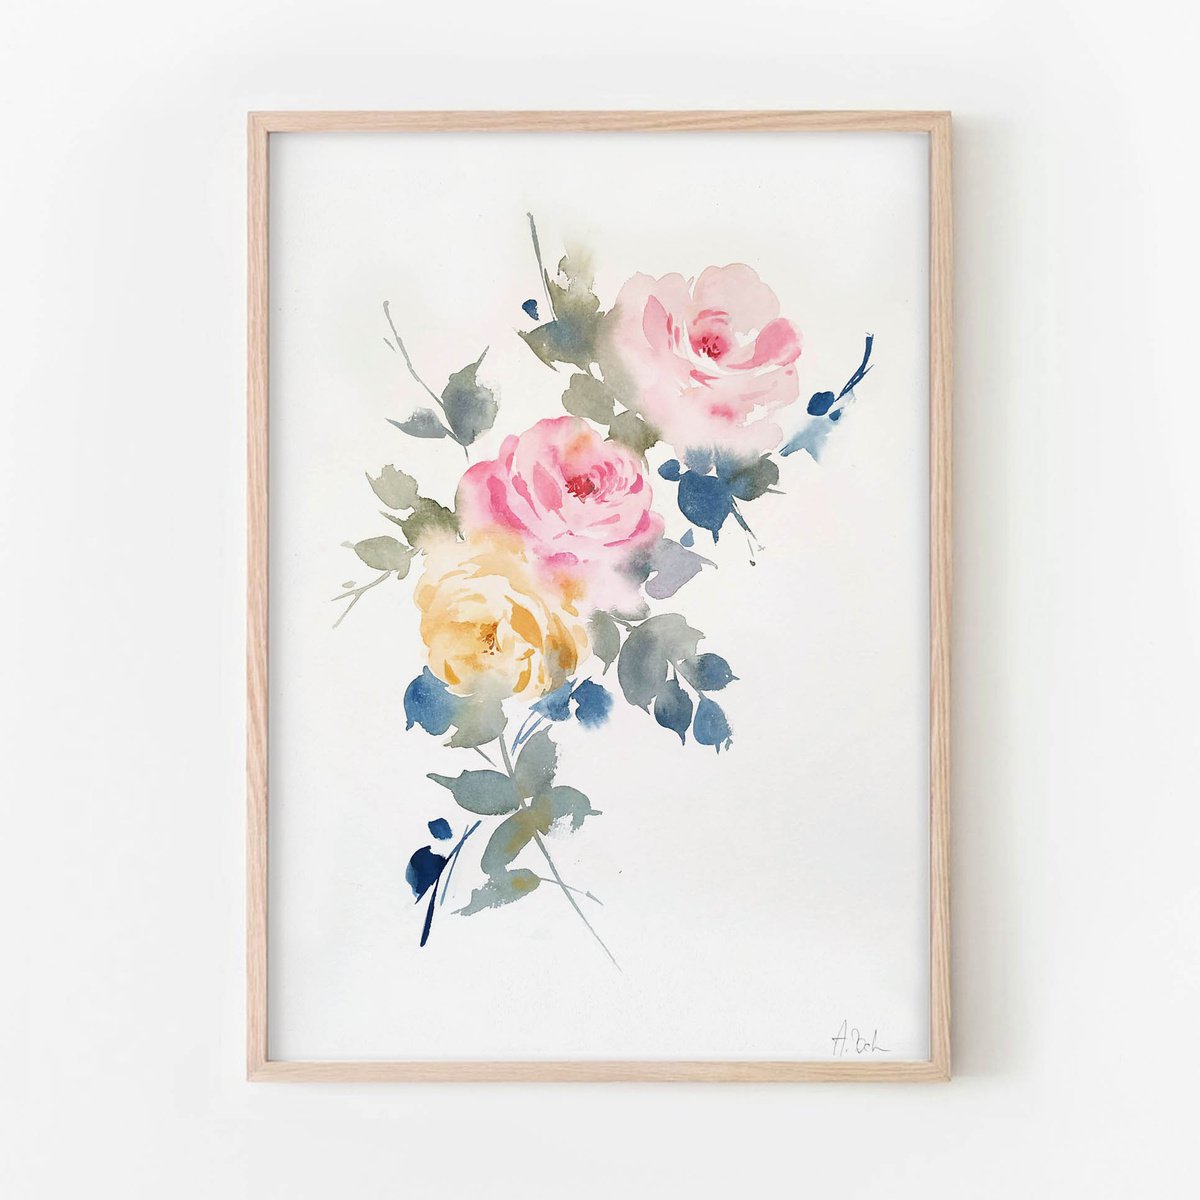 Rose Blooms III by Anja Boban